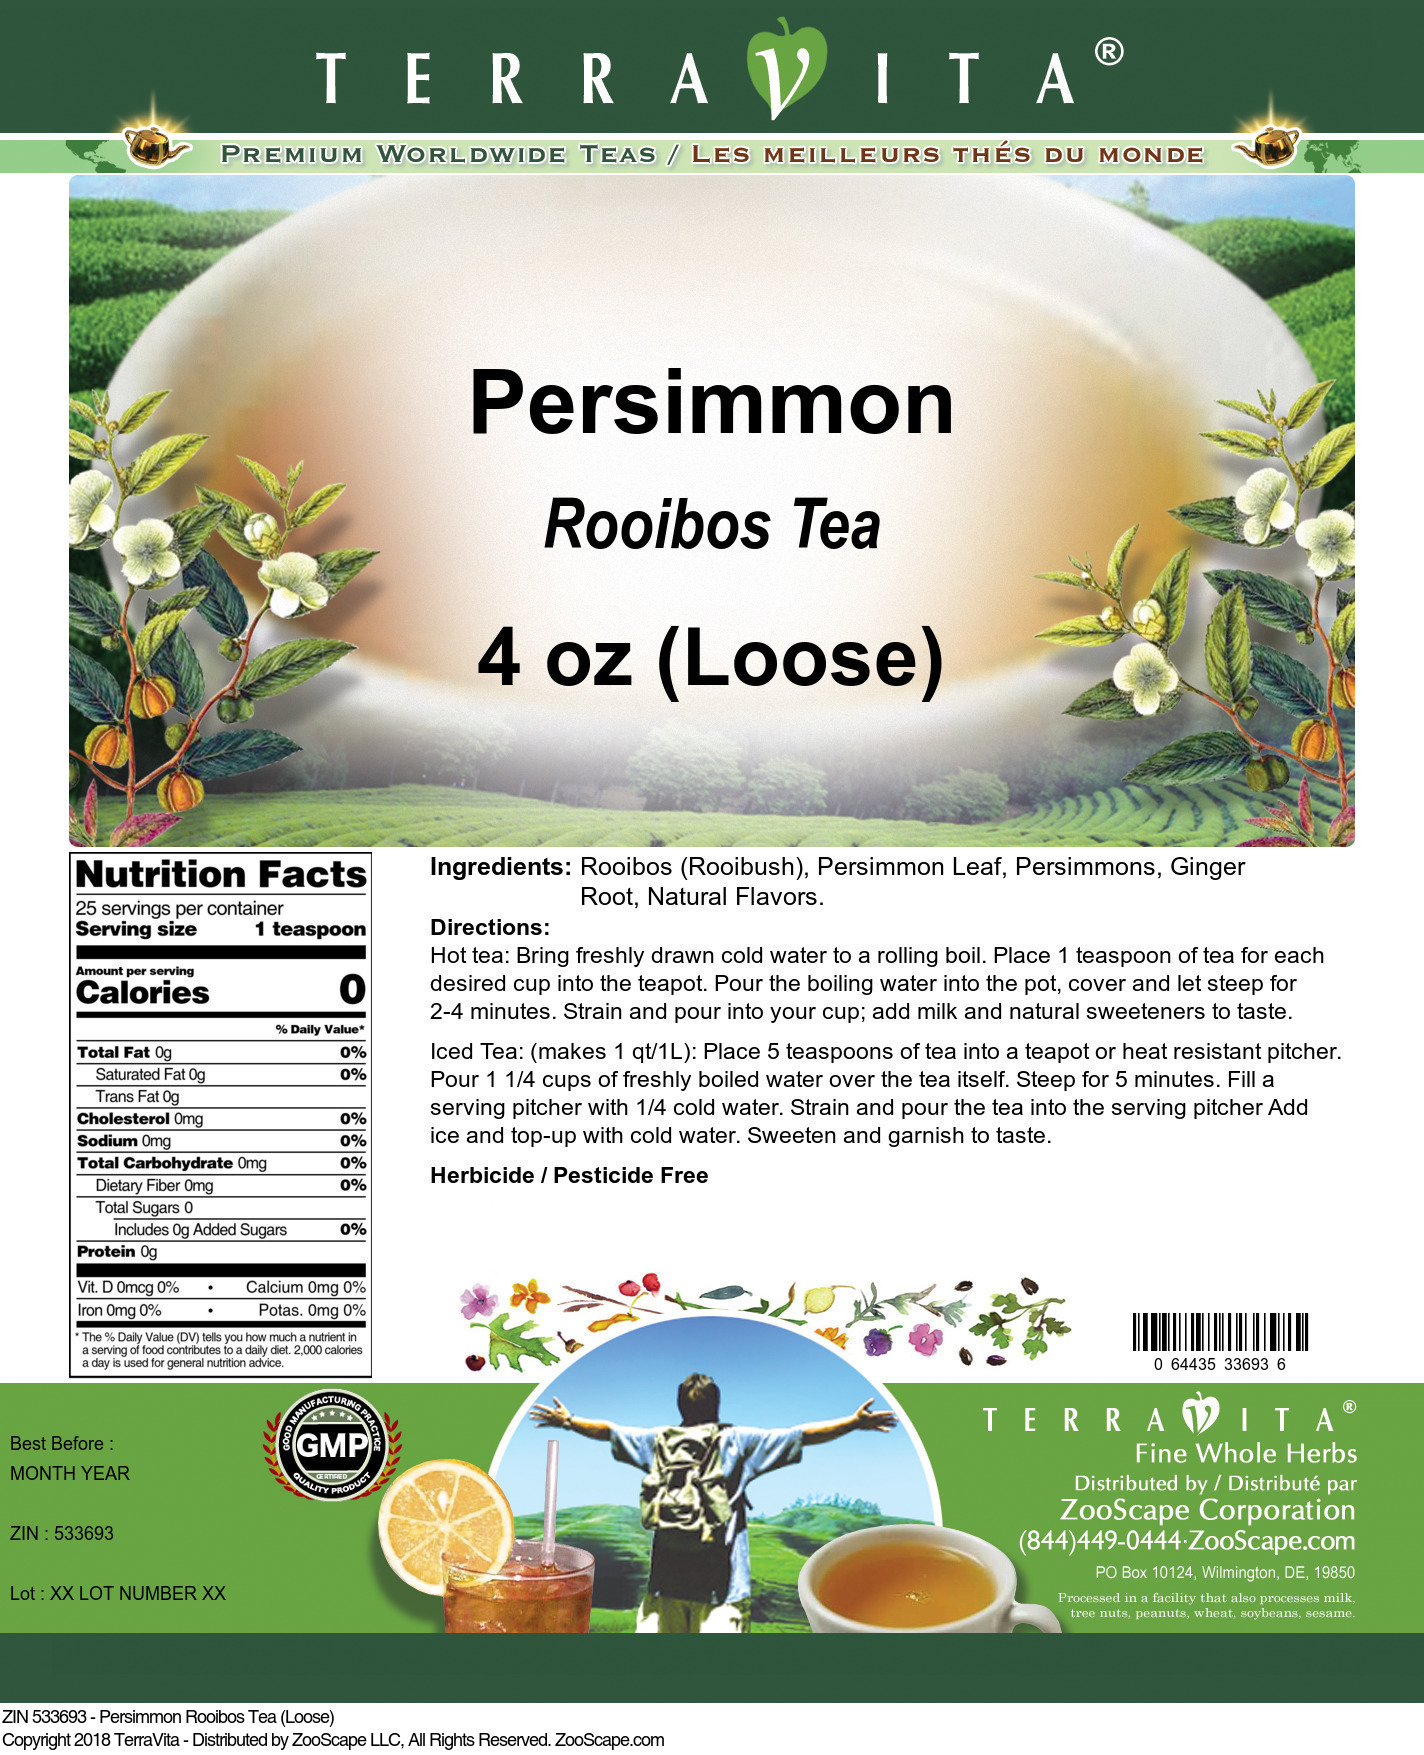 Persimmon Rooibos Tea (Loose) - Label